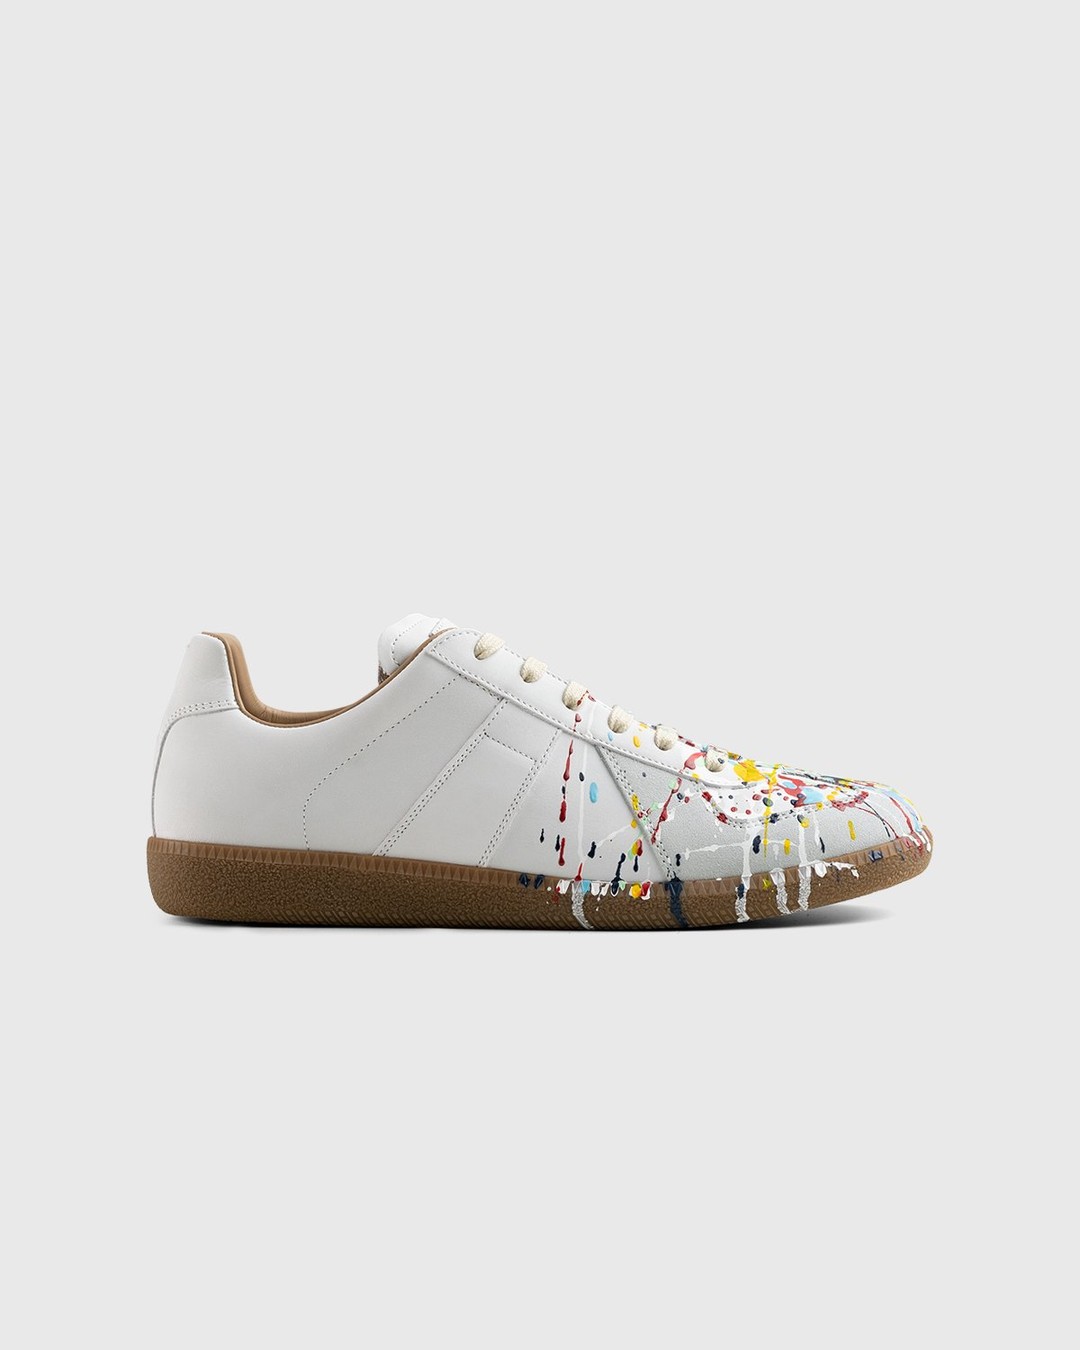 Maison Margiela – Replica Paint Drop Sneakers White - Sneakers - White - Image 1